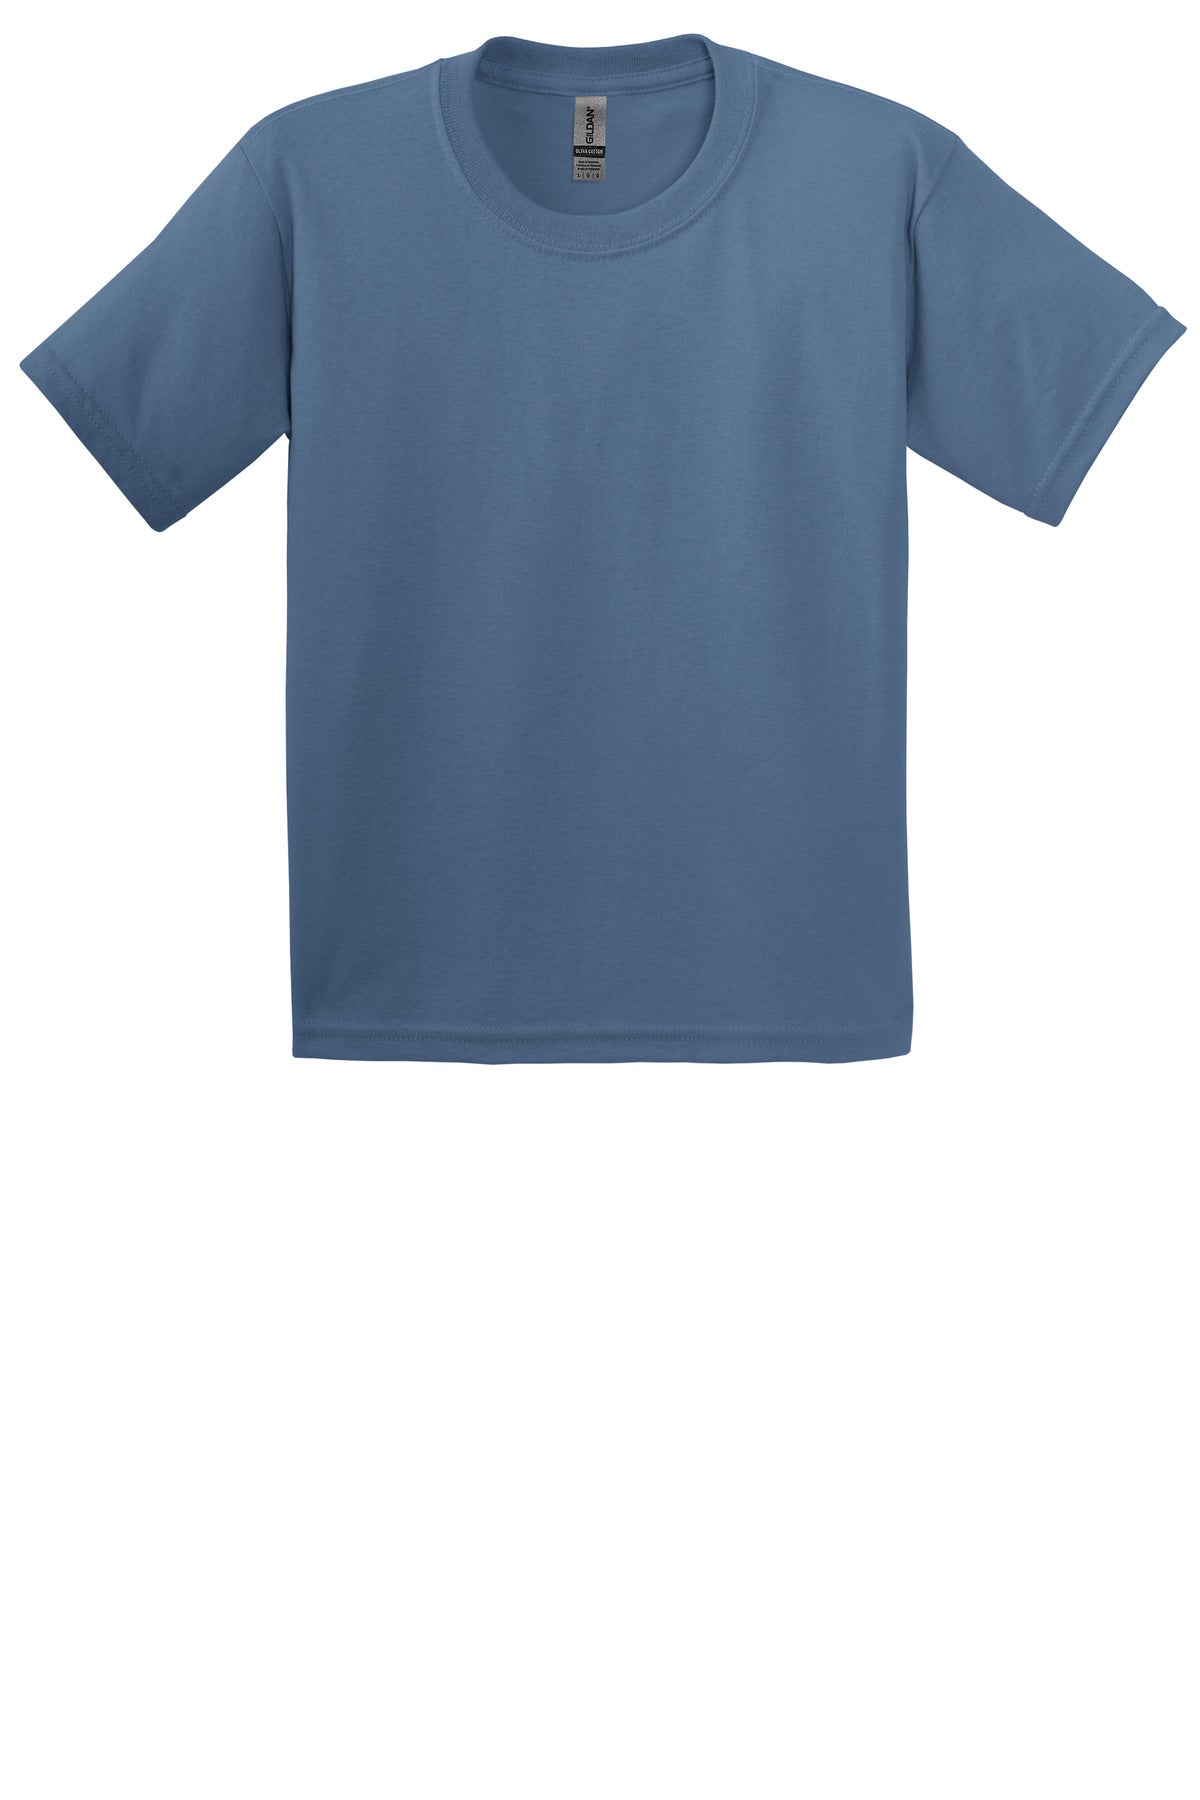 Gildan - Youth Ultra Cotton 100% US Cotton T-Shirt. 2000B - Indigo Blue